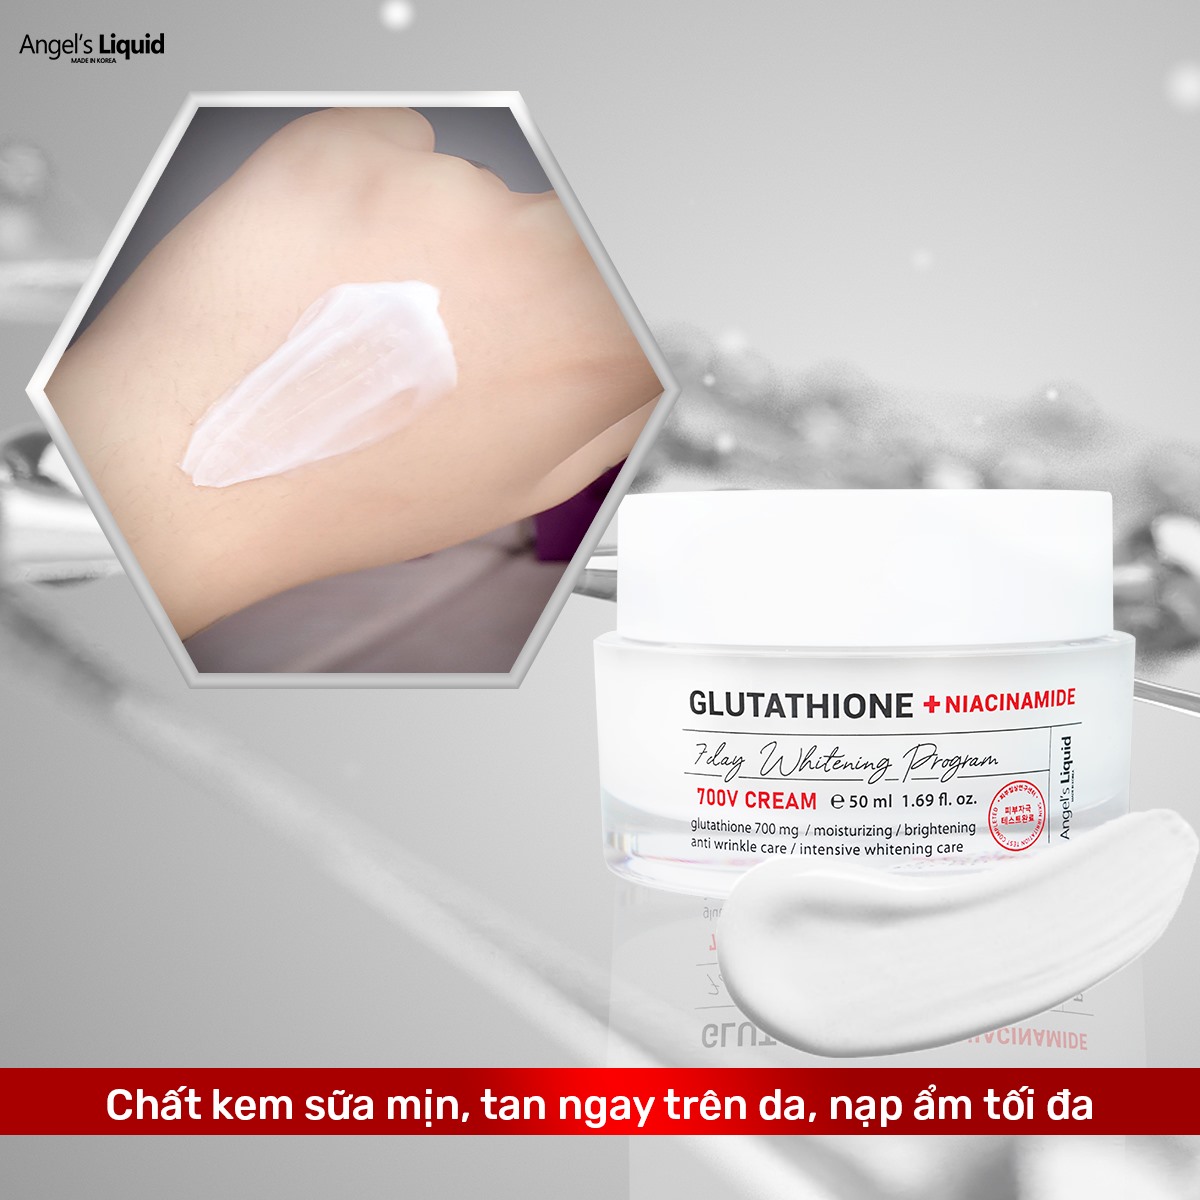 Kem Dưỡng Angel's Liquid Glutathione + Niacinamide 7 Day Whitening Program 700V Cream Dưỡng Sáng Da, Mờ Thâm Nám 50ml